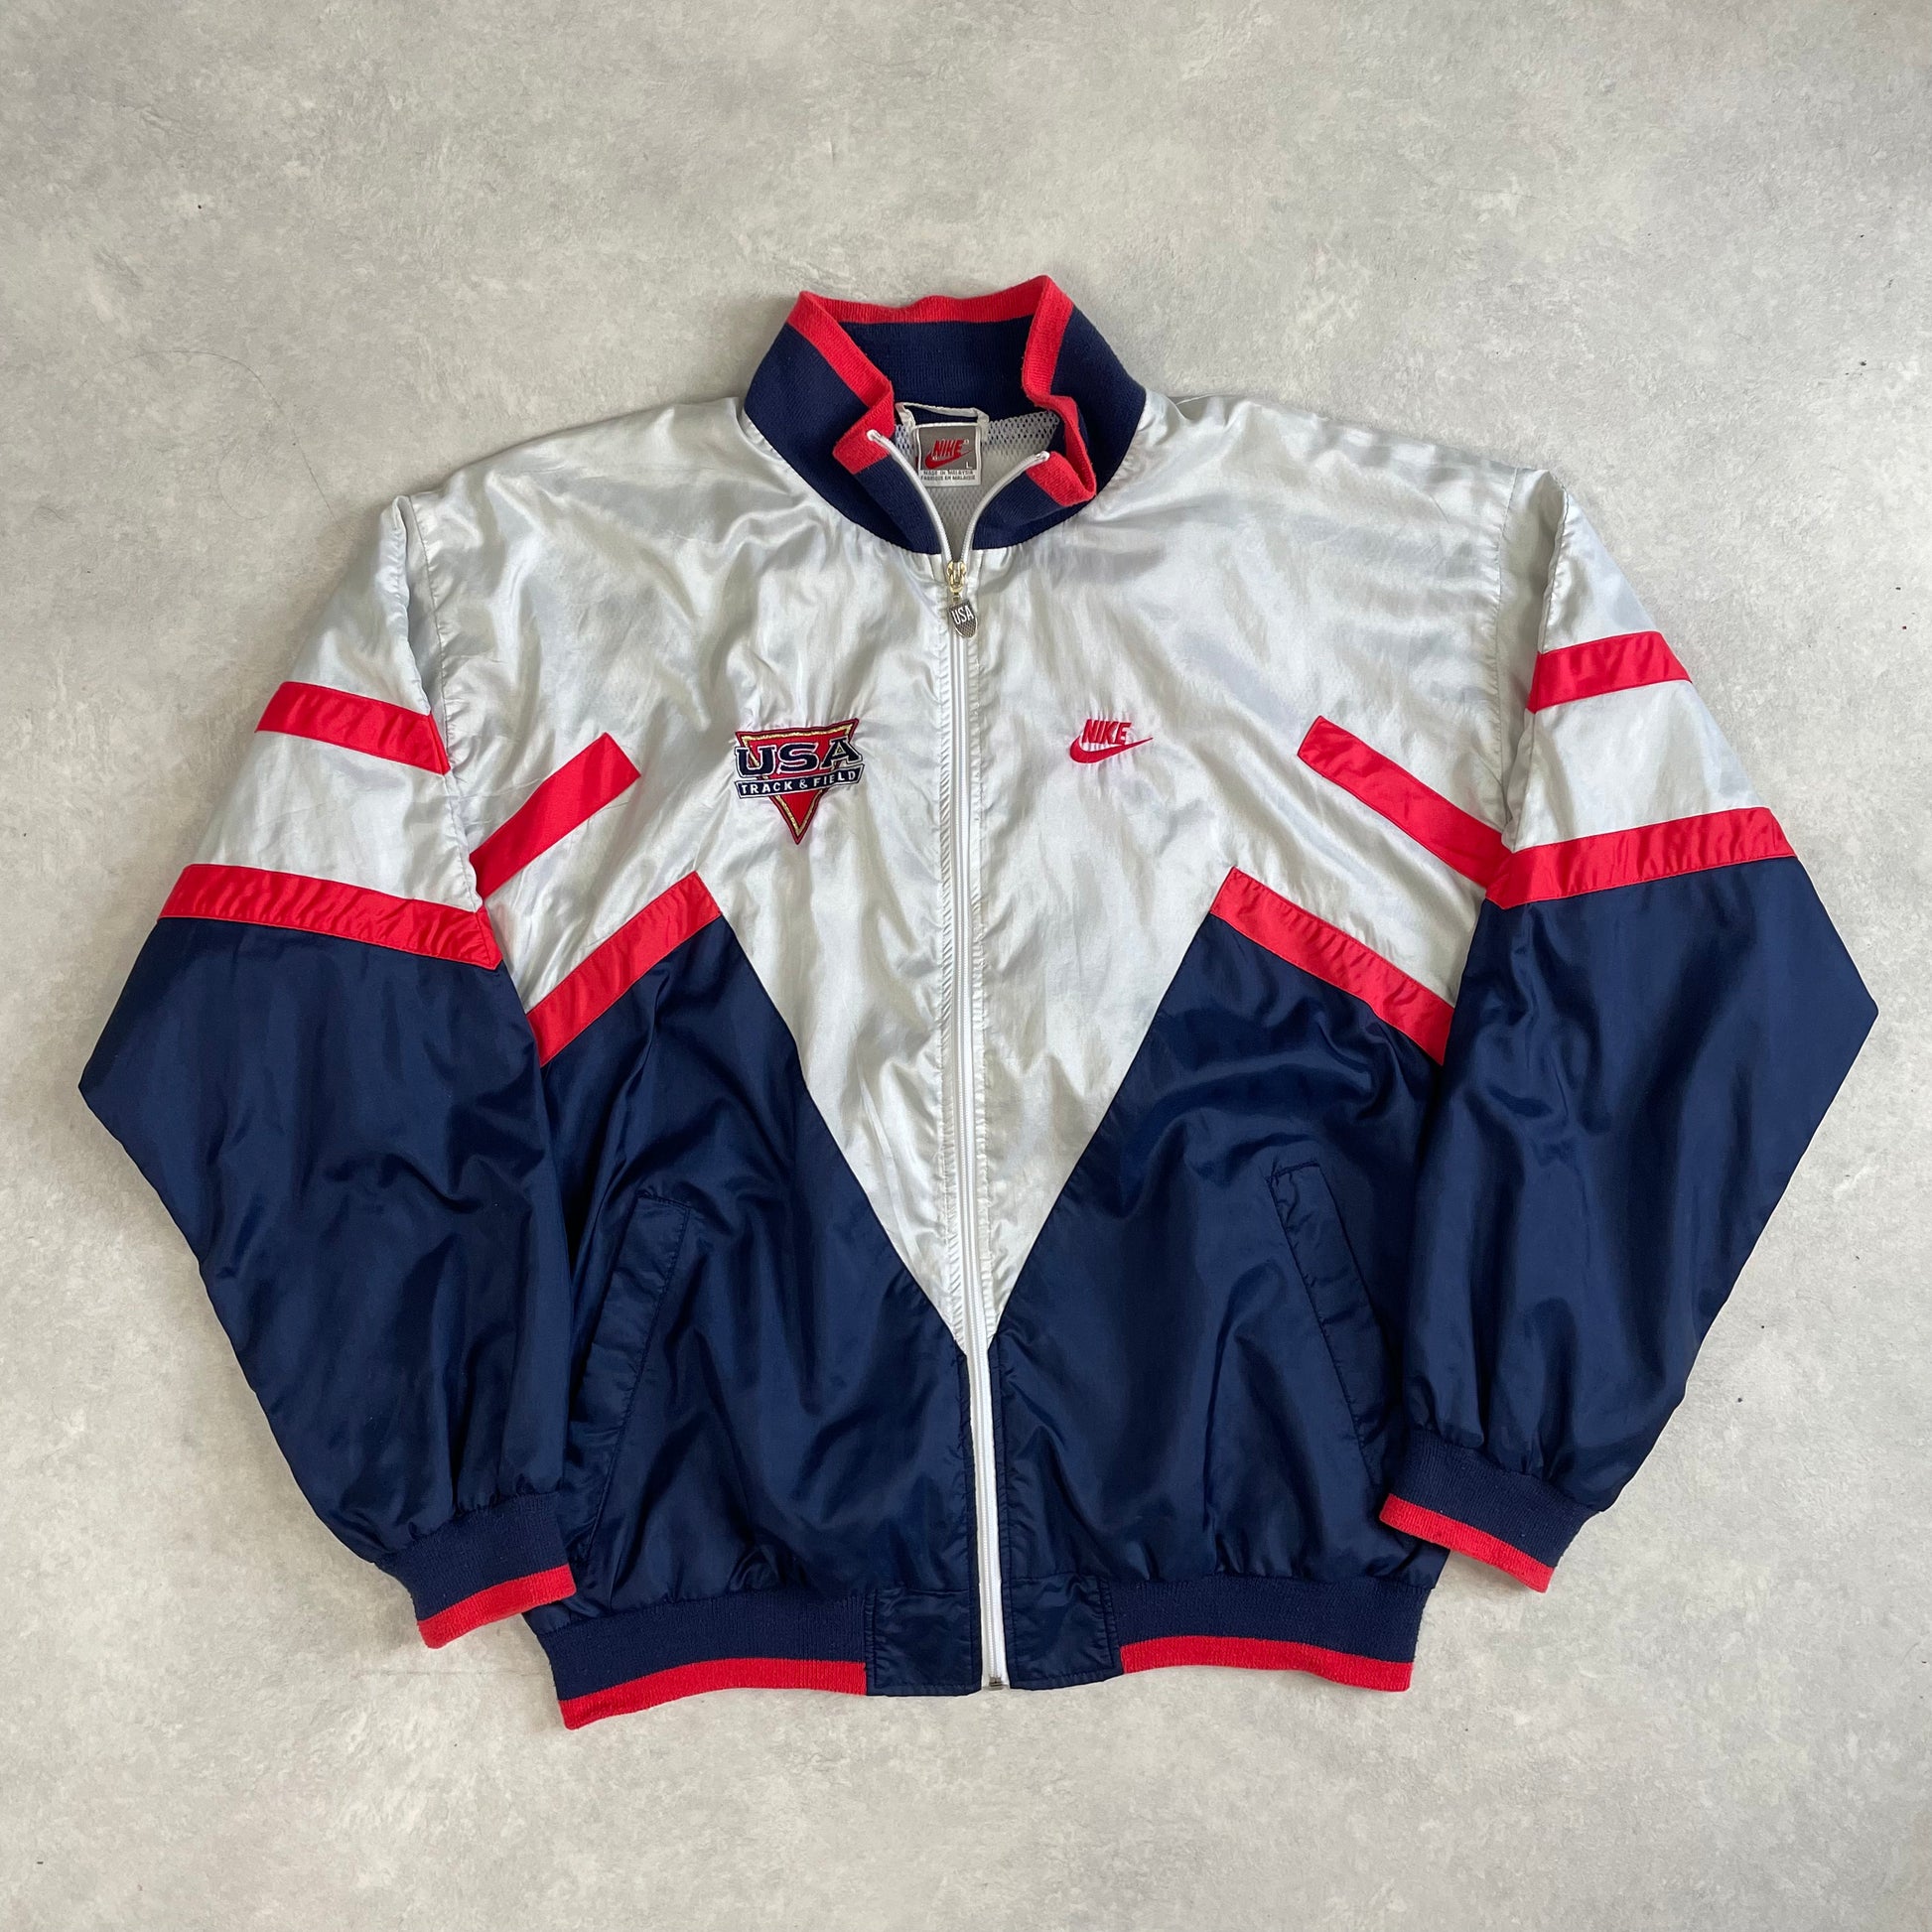 Vintage Jacket USA Track & Field Jacket 90's The Mean Vintage